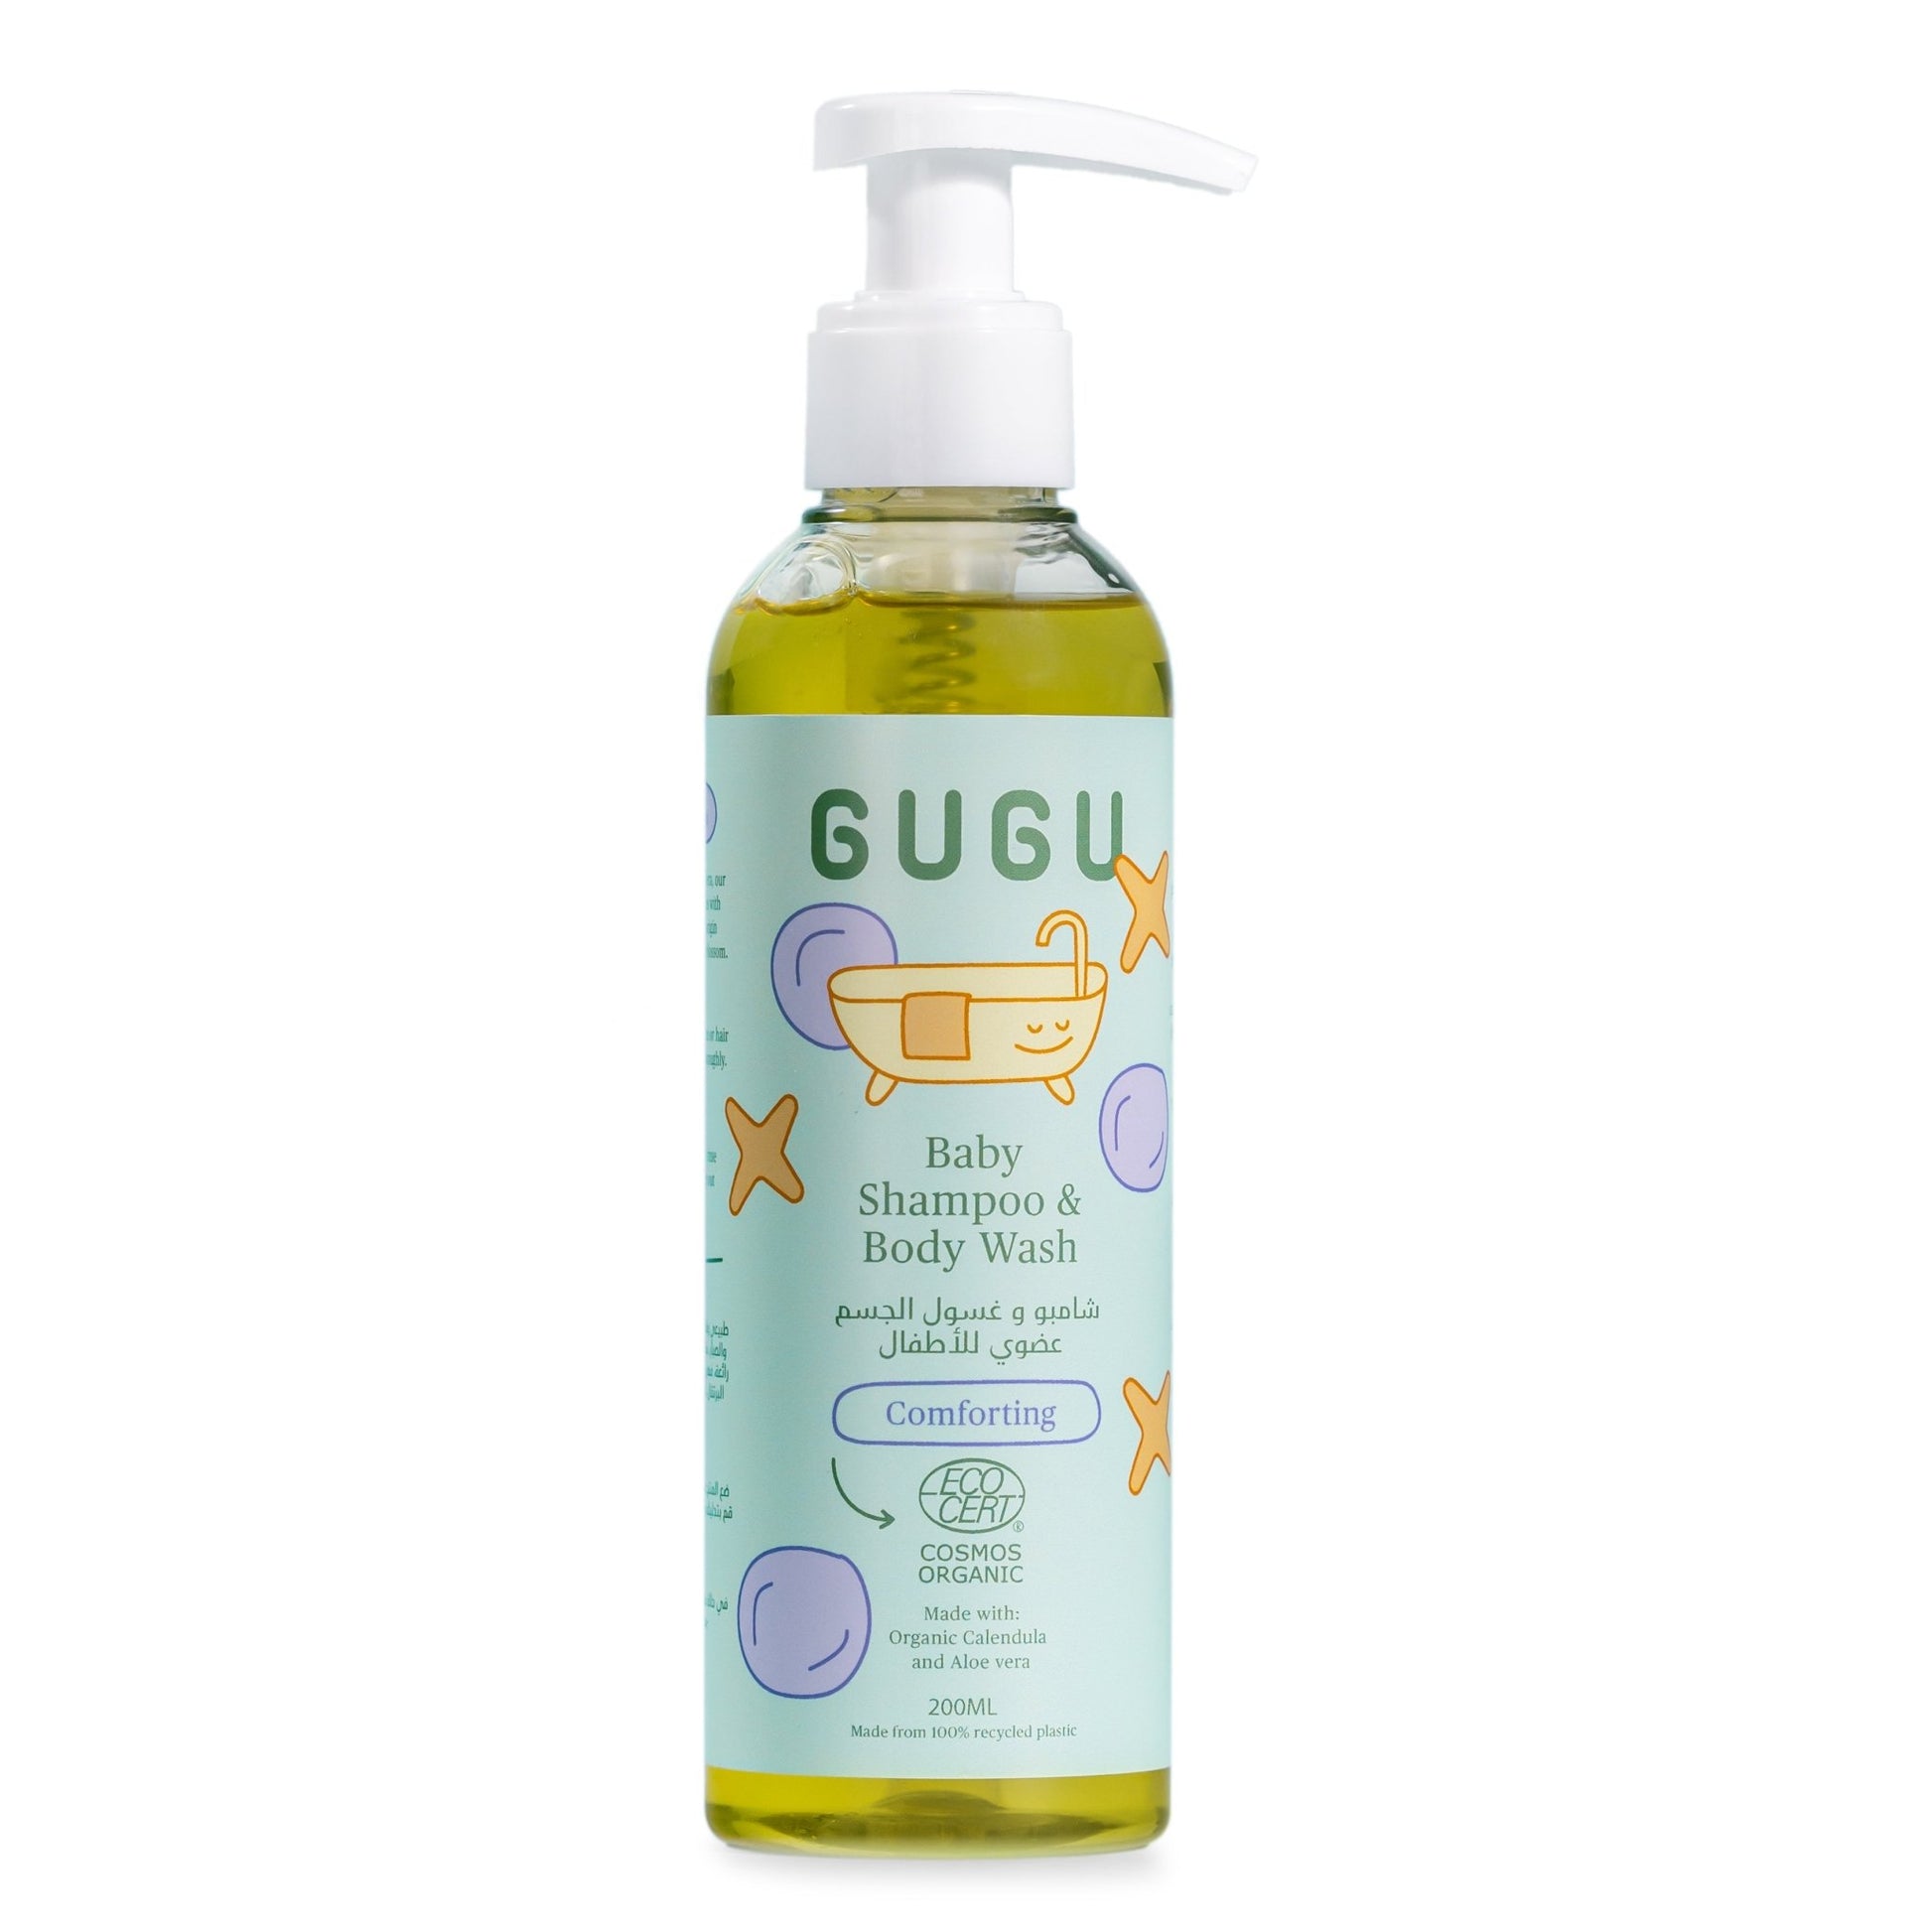 Organic baby shampoo & body wash - 200ml - My BumBum